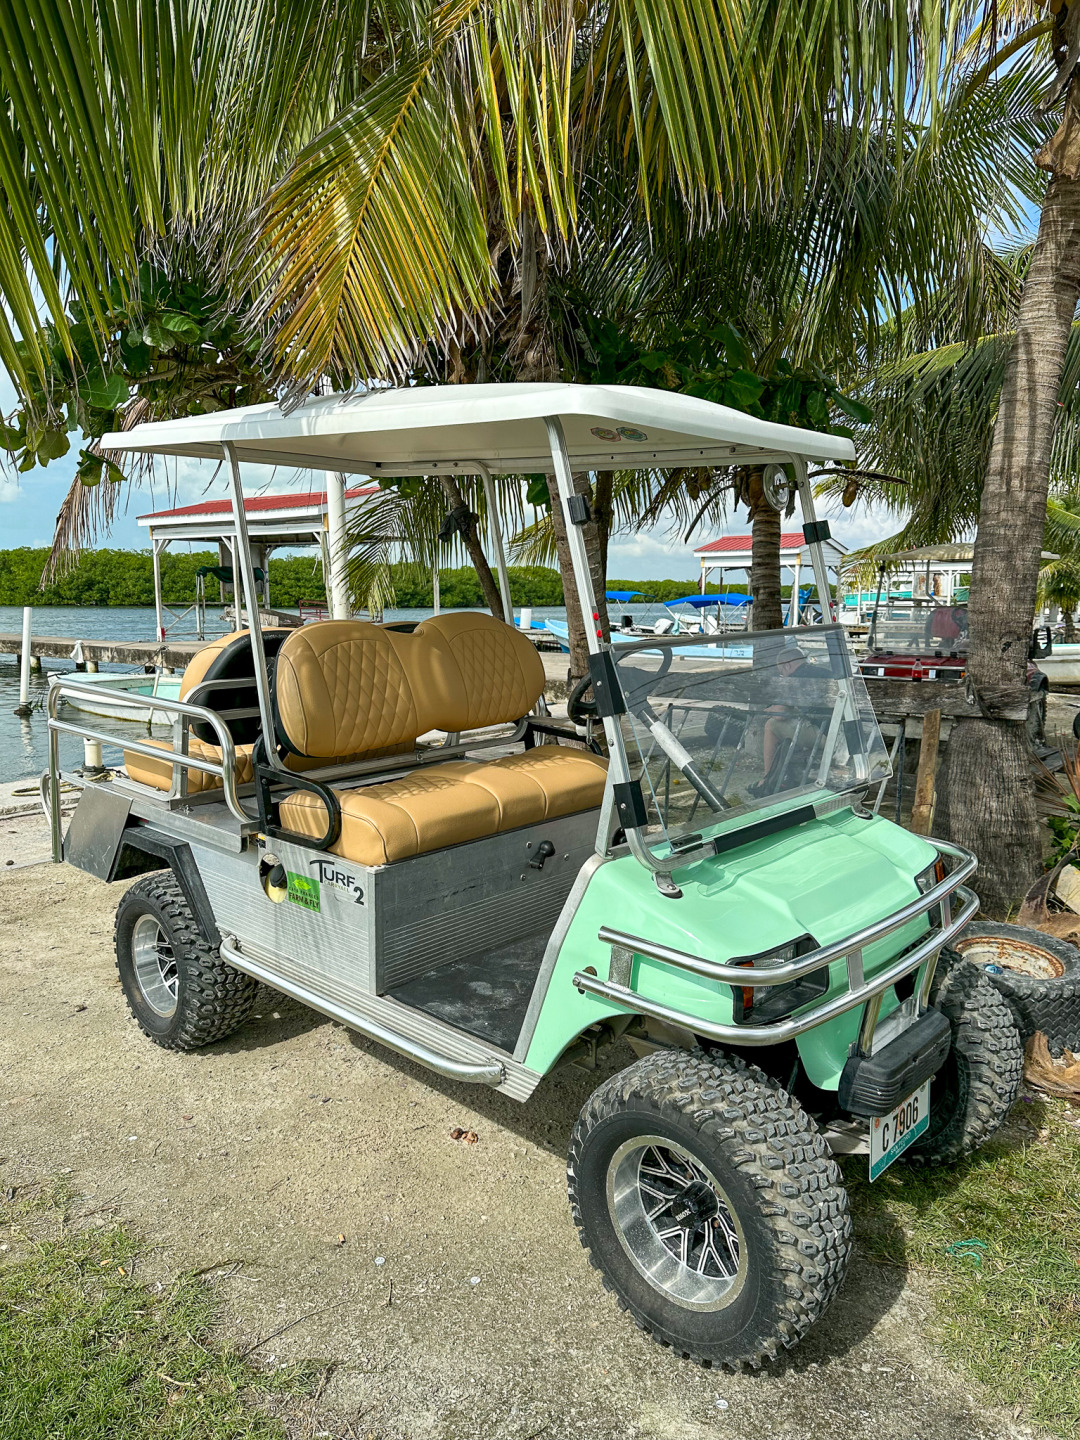 Our golf cart